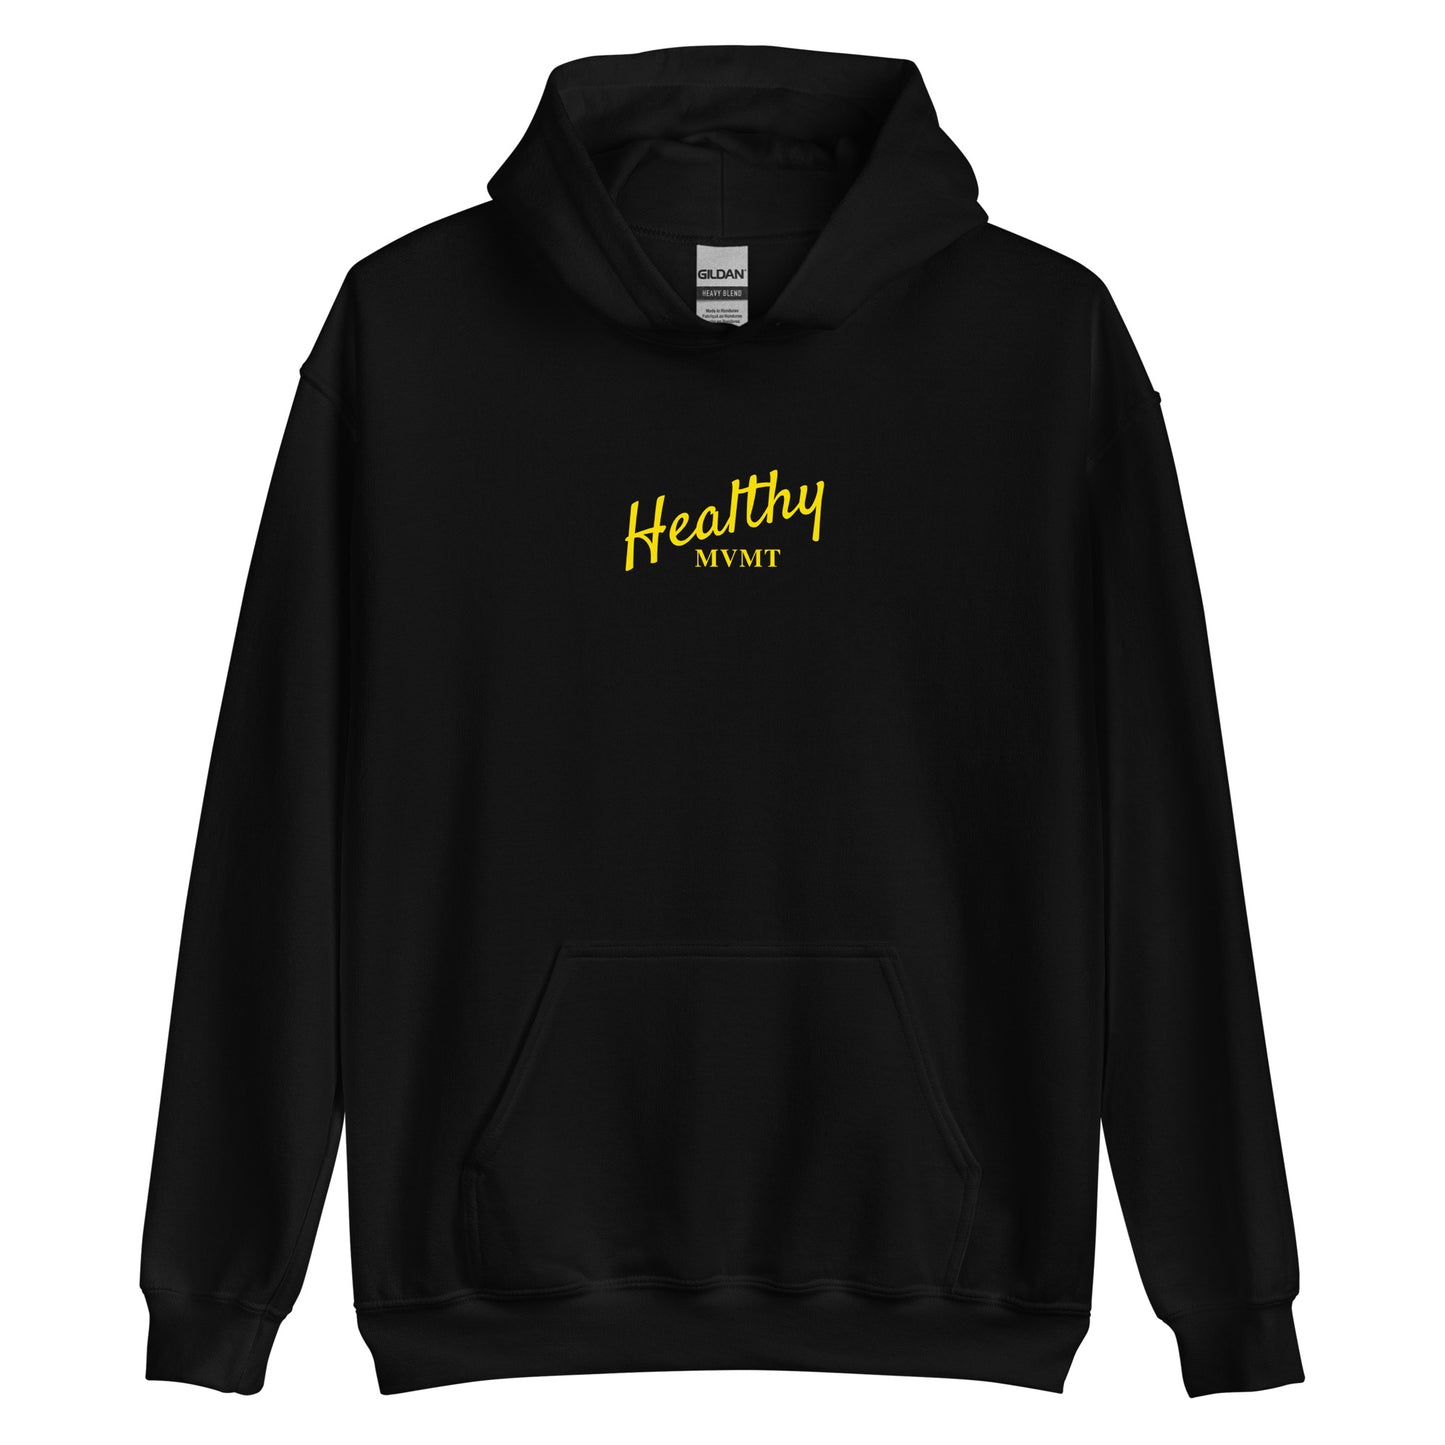 HealthyMVMT (Black) | Men's Hoodie by HealthyMVMT